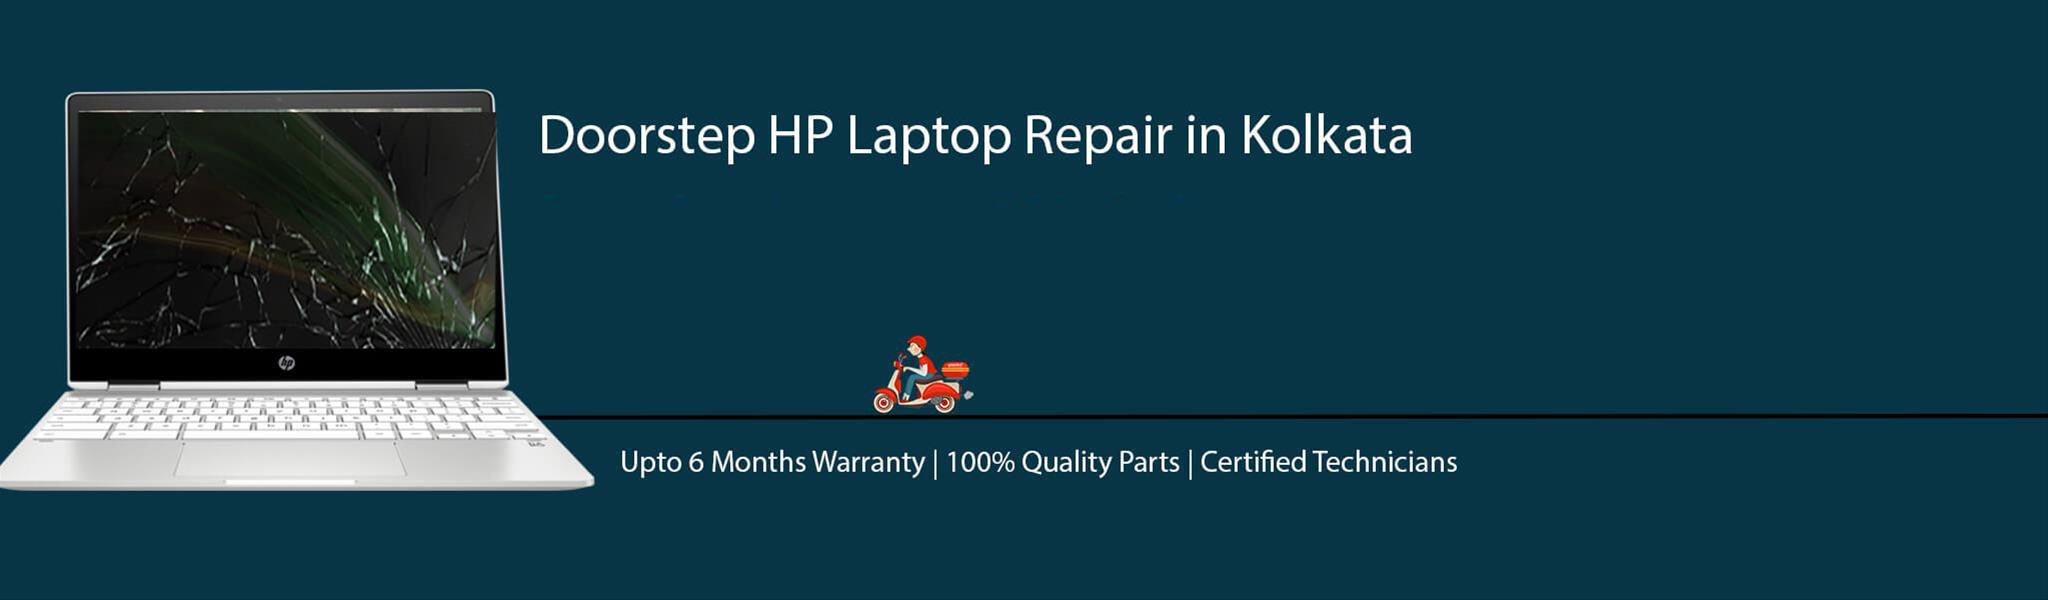 HP-laptop-banner-kolkata.jpg